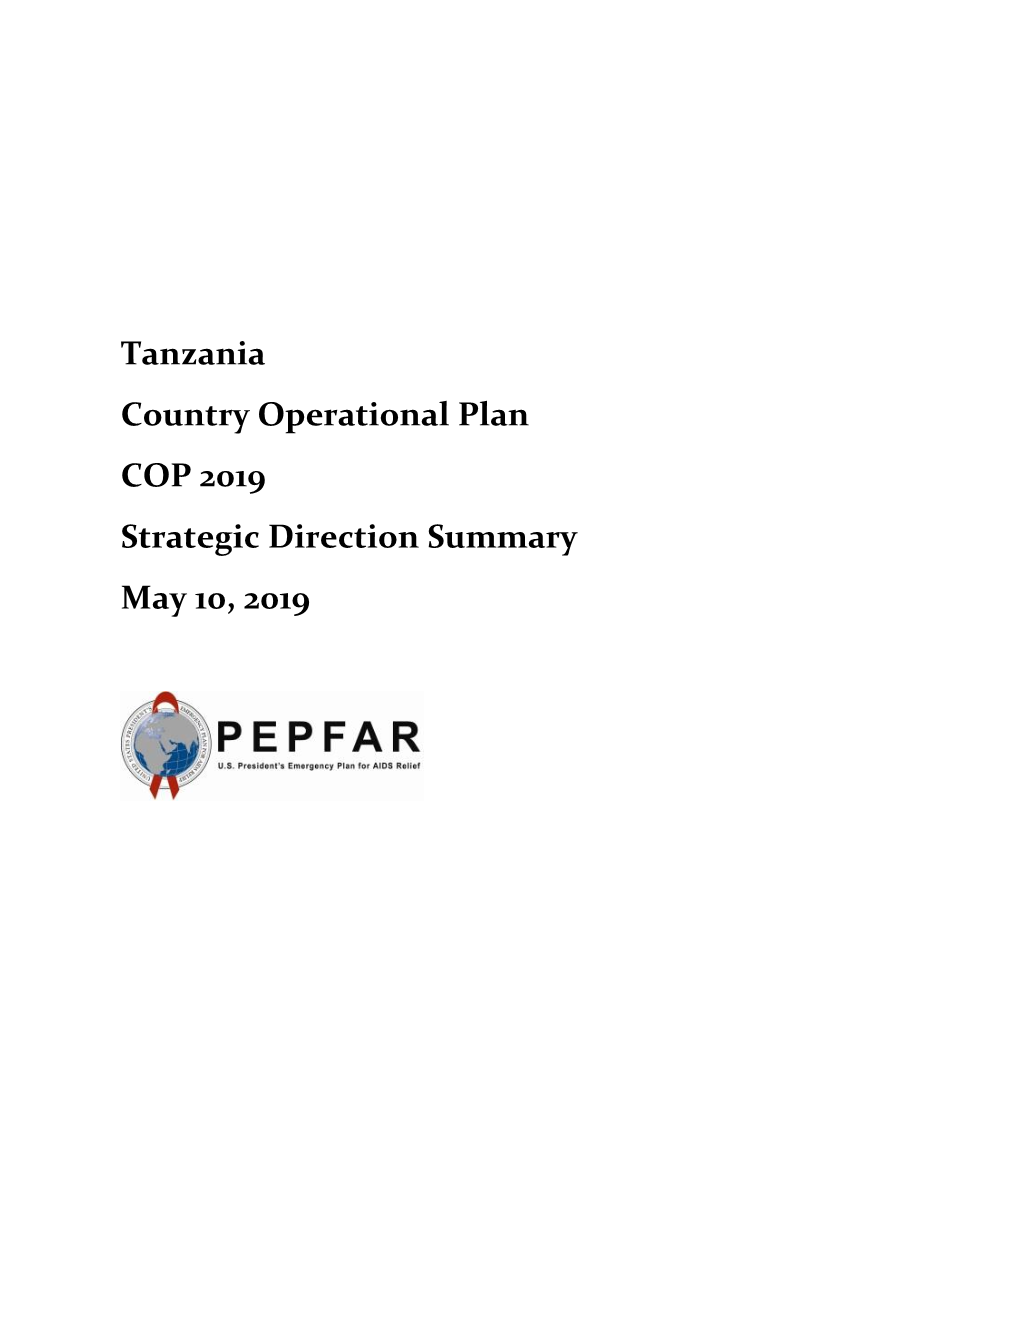 Tanzania Country Operational Plan COP 2019 Strategic Direction Summary May 10, 2019